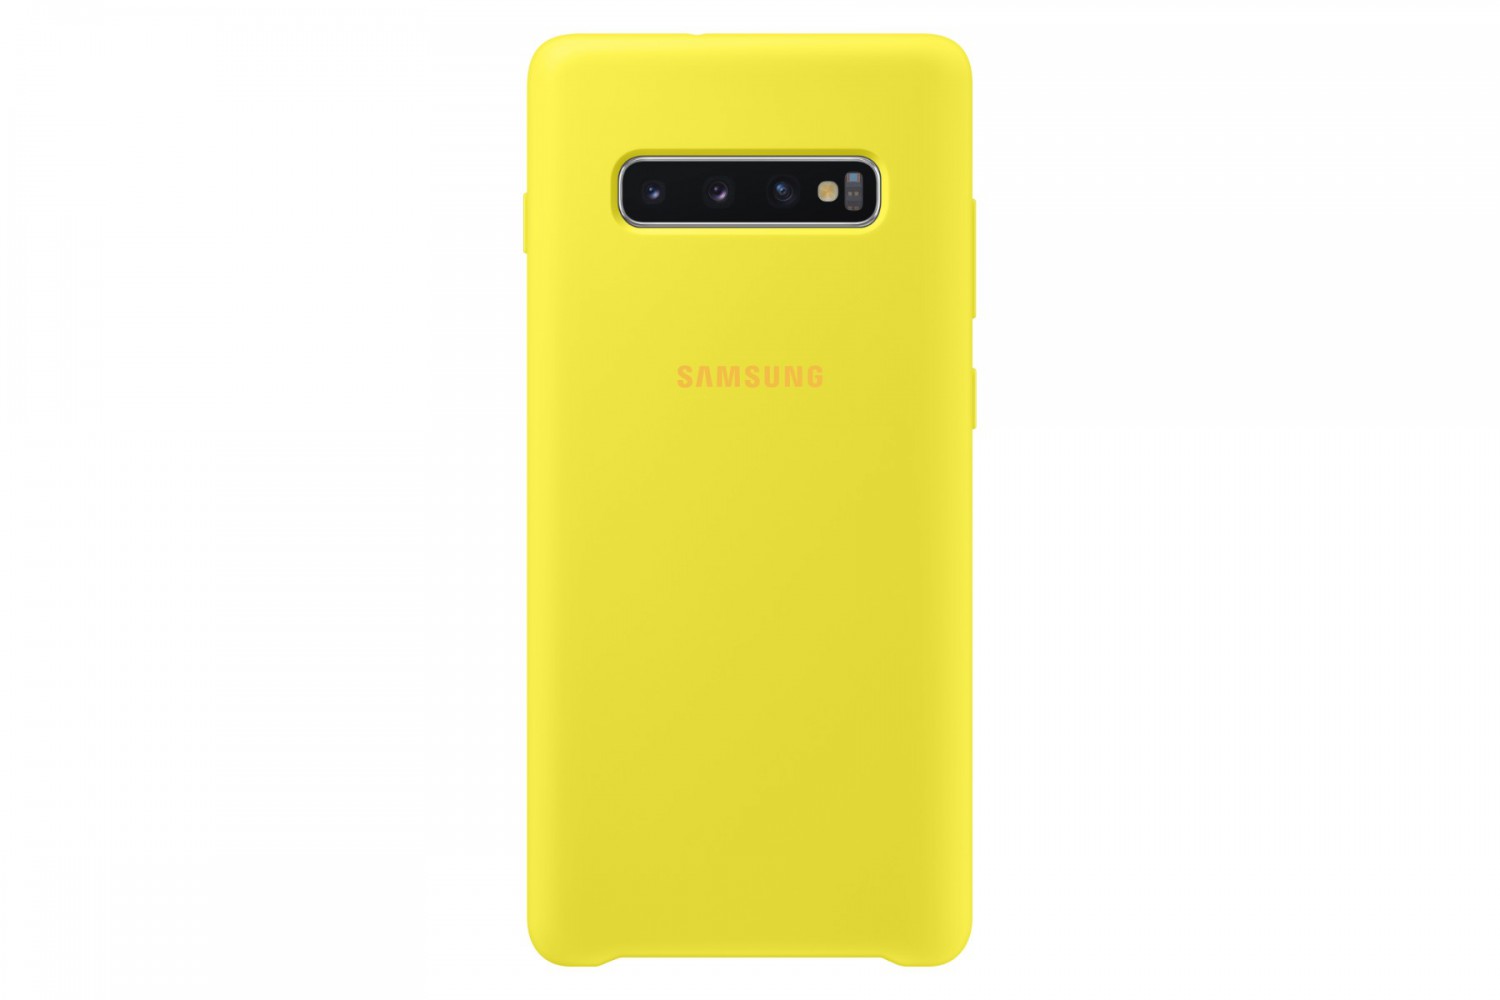 Silikonové pouzdro Silicone Cover EF-PG975TYE pro Samsung Galaxy S10 Plus, žlutá